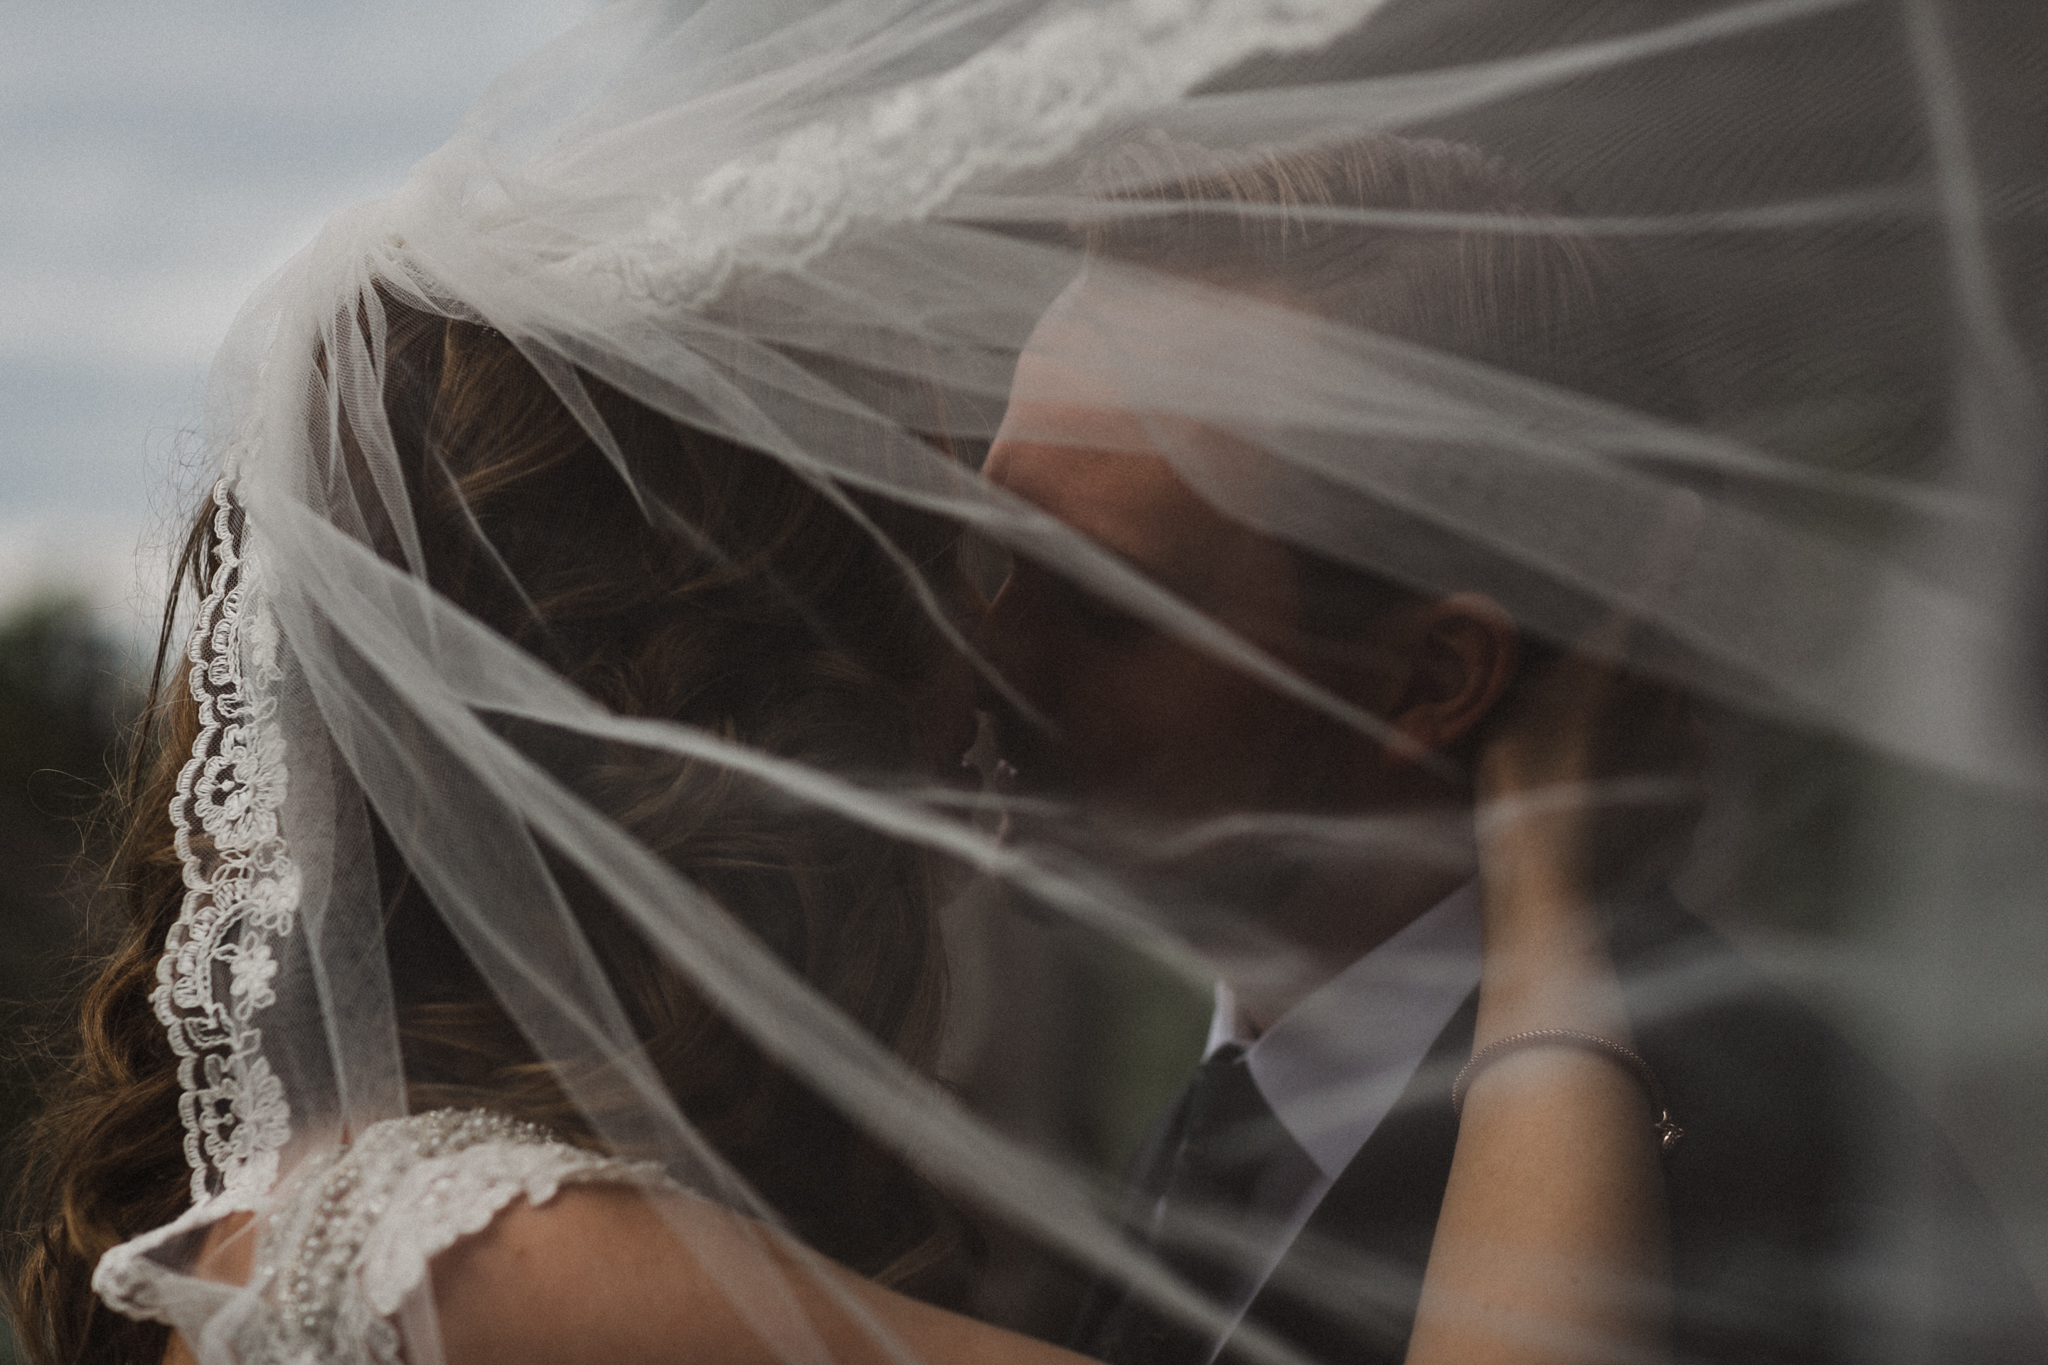 Bride and groom embrace underneath veil in moody portrait